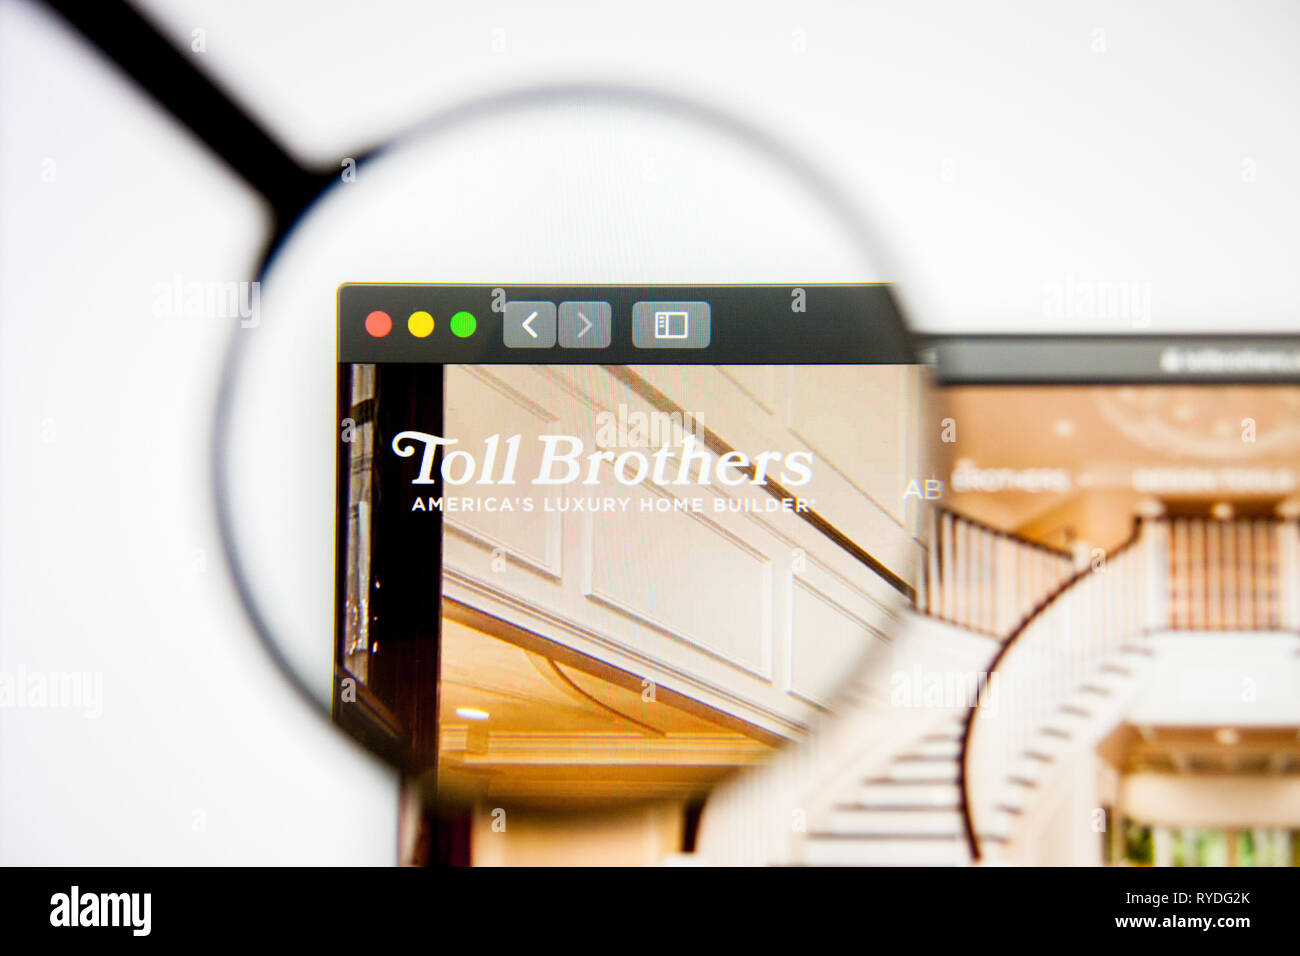 Los Angeles, Kalifornien, USA - 5. März 2019: Toll Brothers Homepage. Toll Brothers Logo sichtbar auf dem Display, Illustrative Editorial Stockfoto